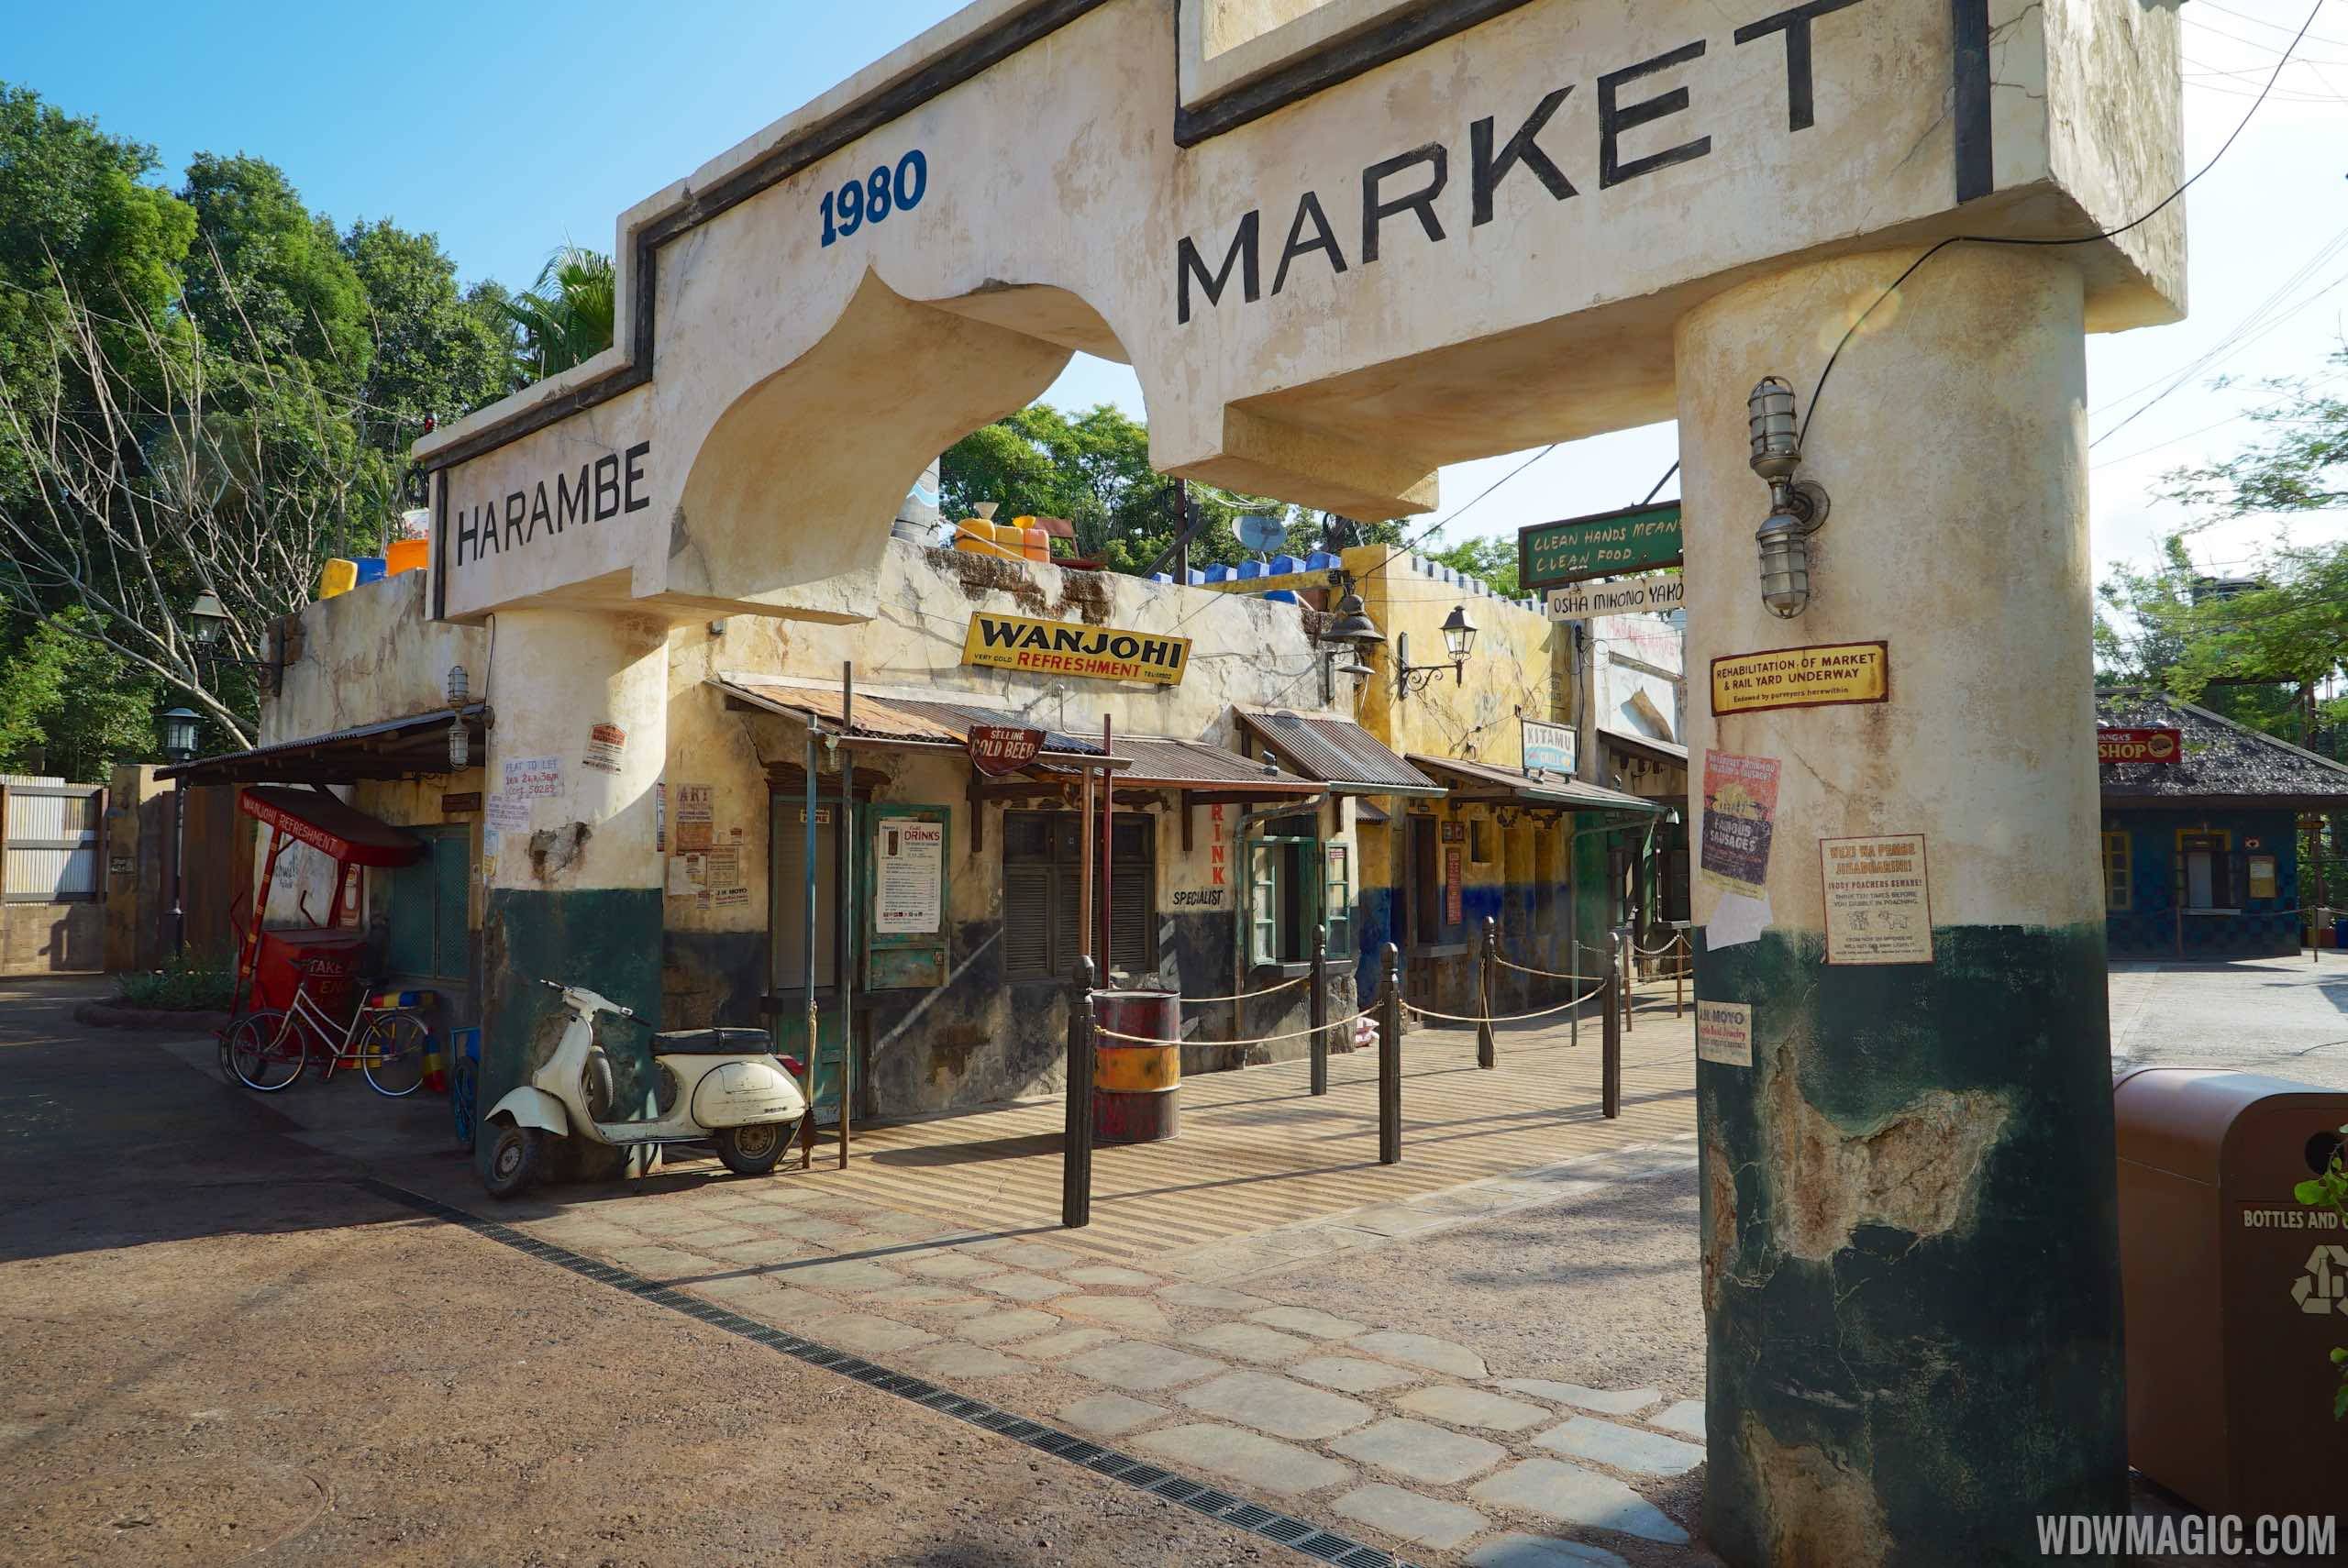 PHOTOS and VIDEO - Walkthrough of the new Harambe Market at Disney's Animal Kingdom